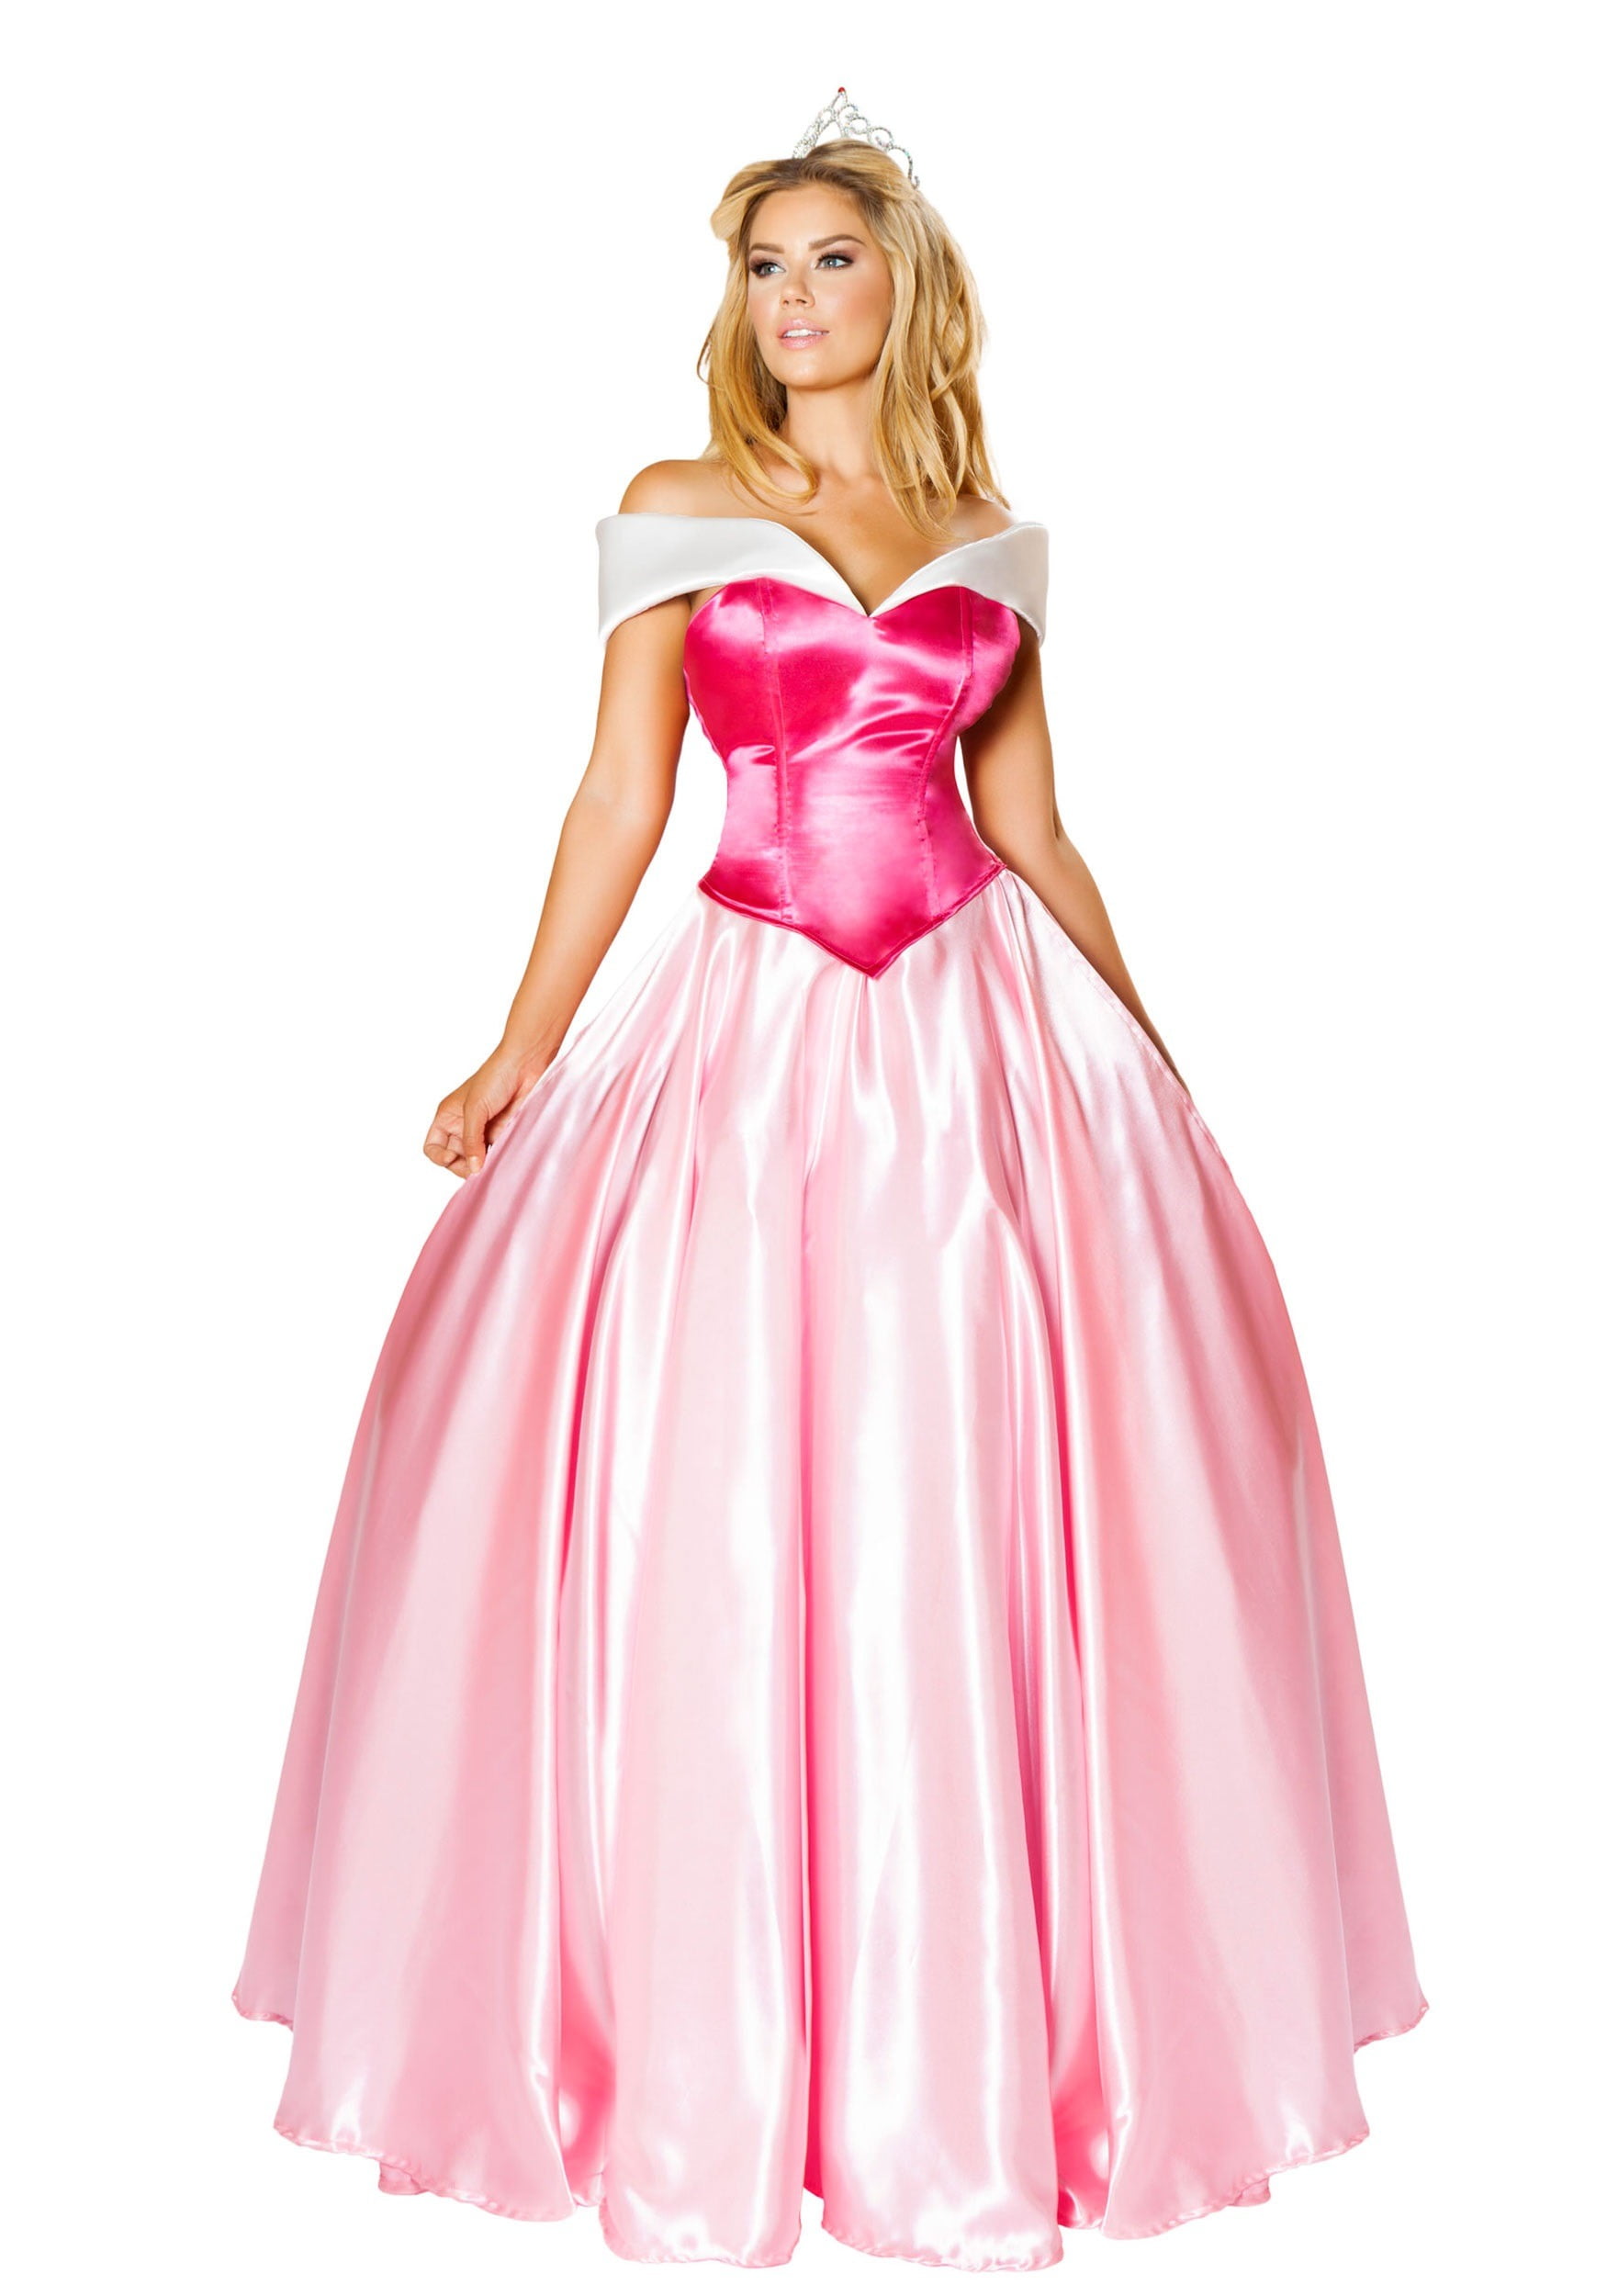 a princess dress